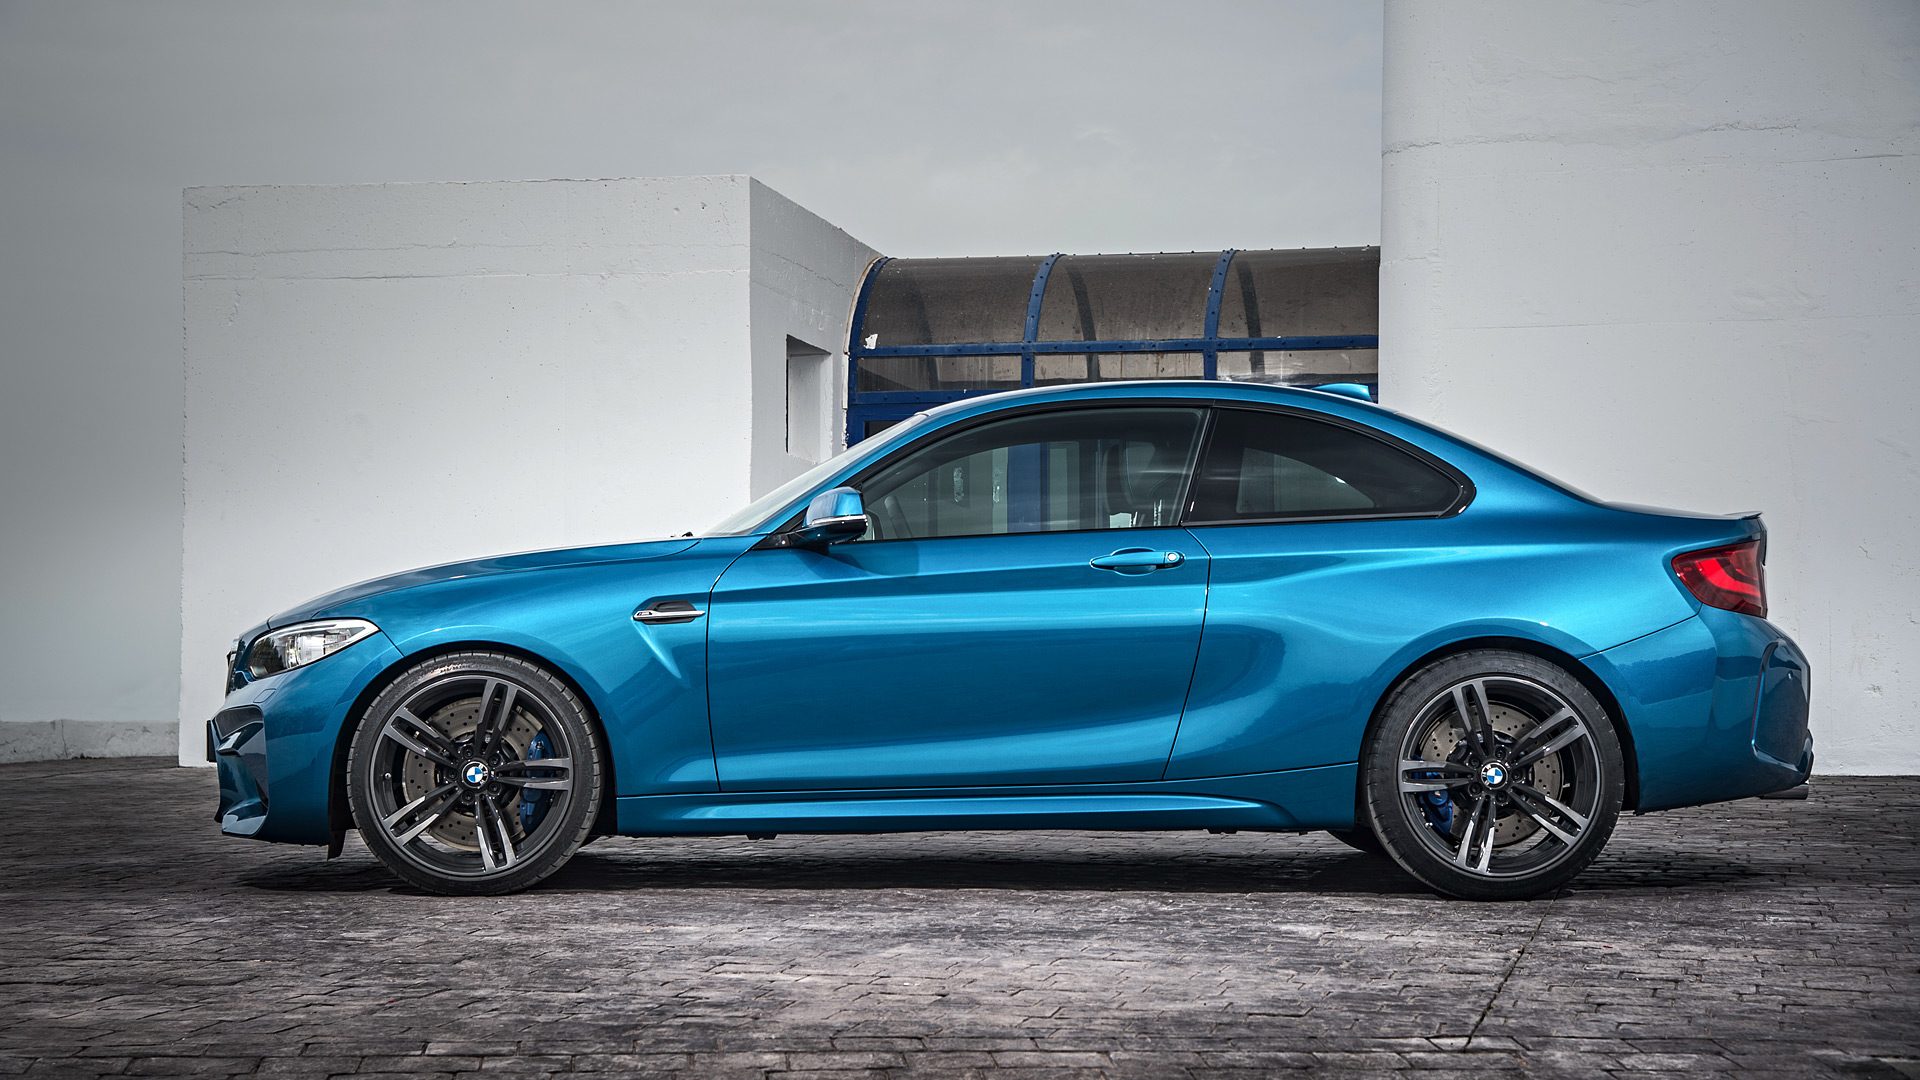  2016 BMW M2 Coupe Wallpaper.